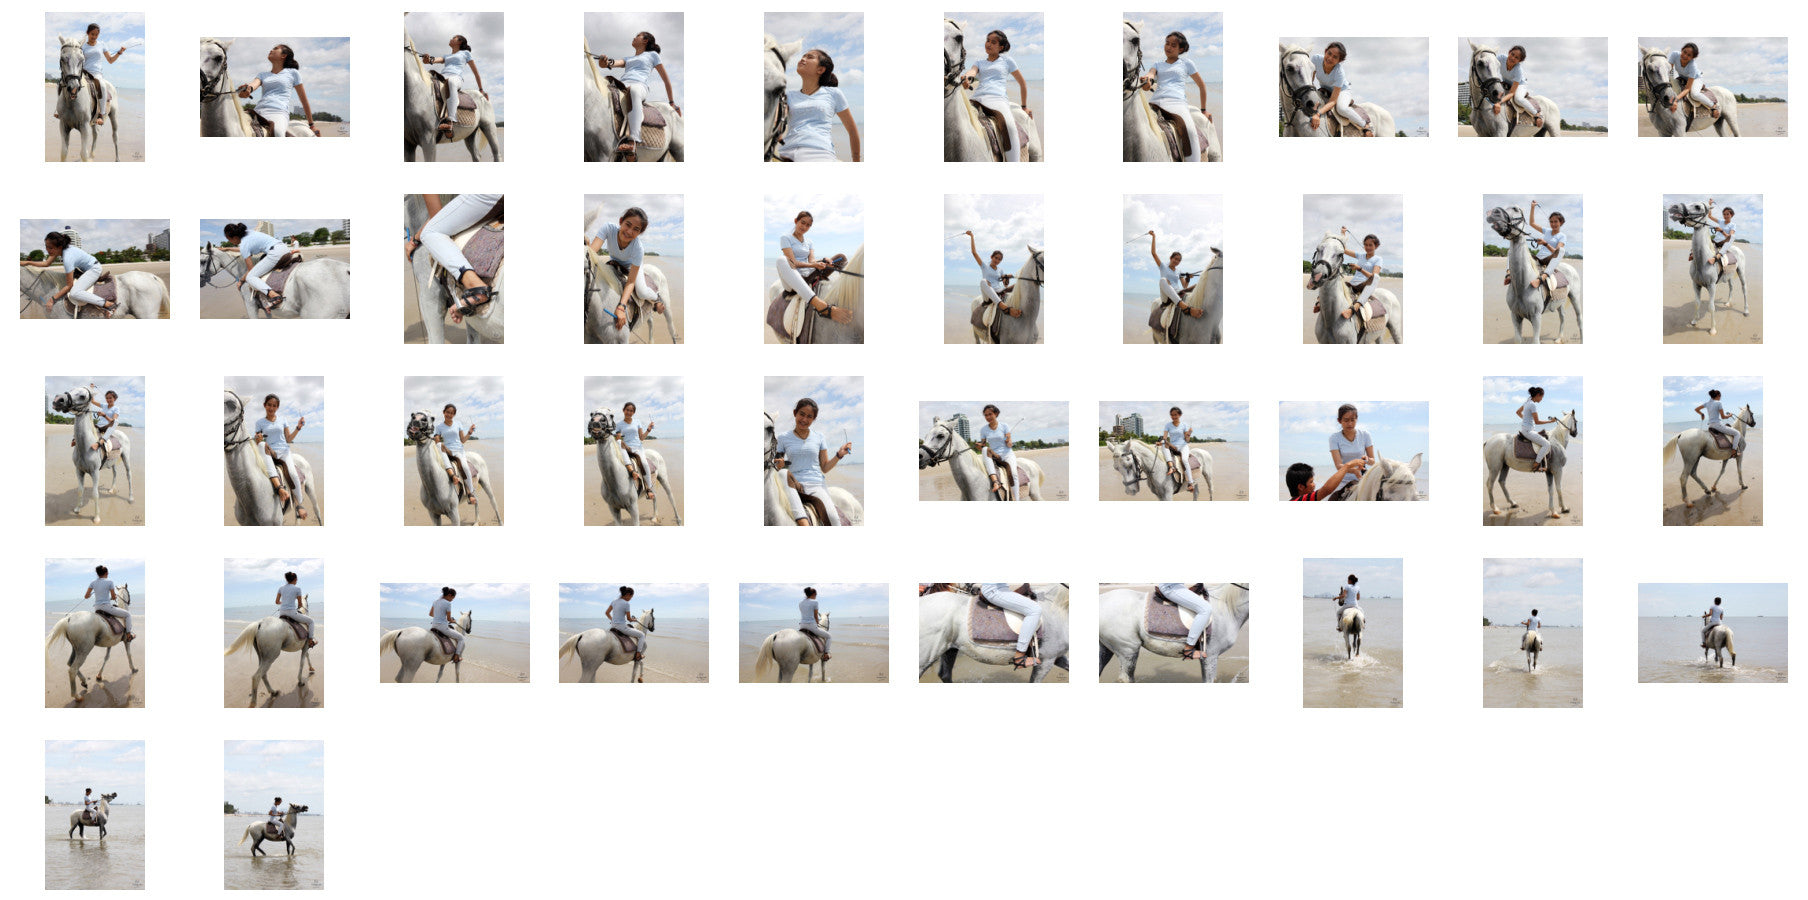 Som in Jodhpurs Riding with Saddle on White Arabian Horse, Part 2 - Riding.Vision